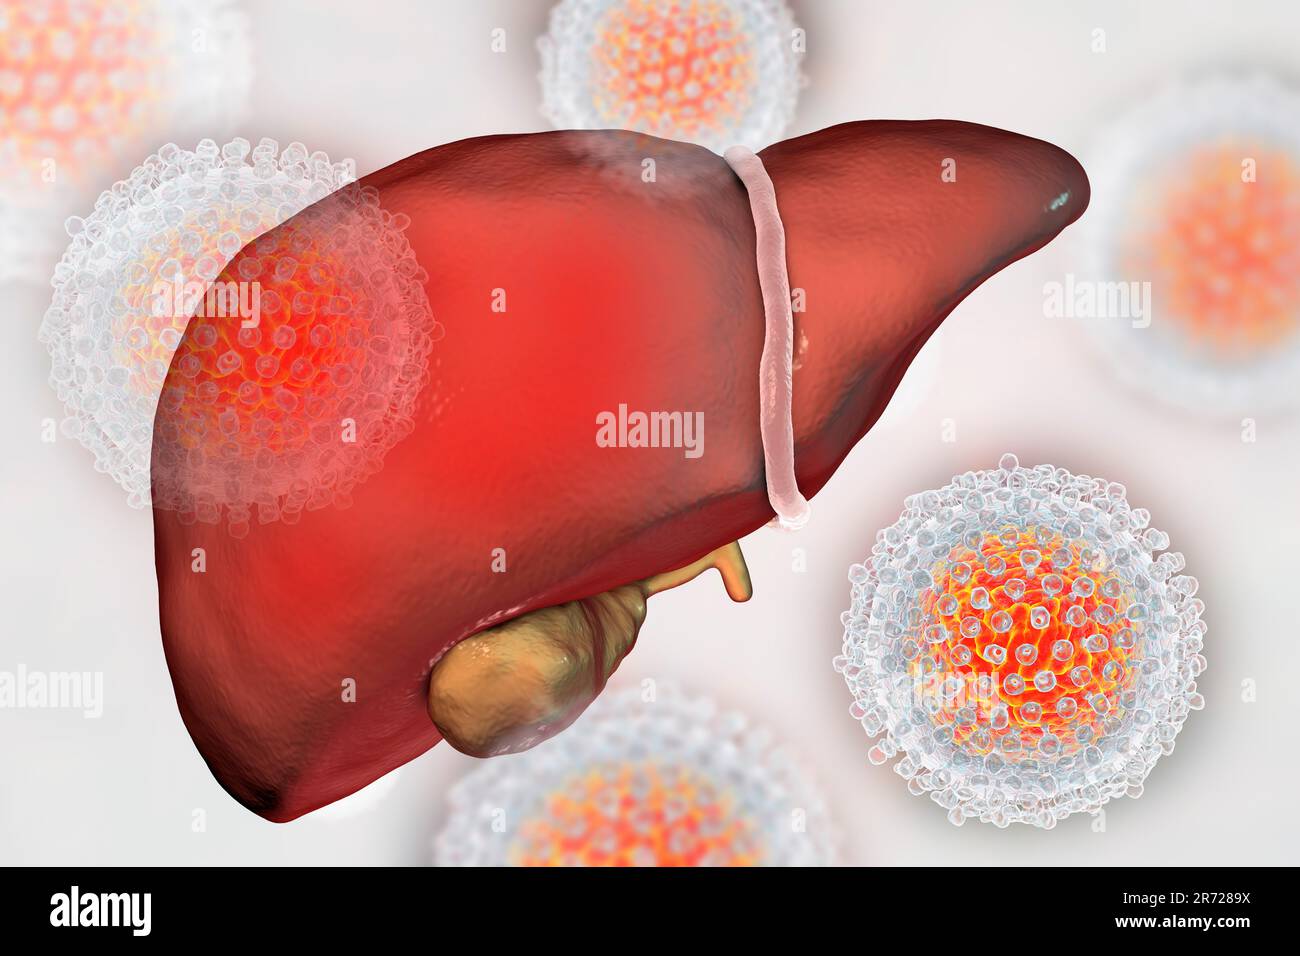 Leber mit Hepatitis und Nahaufnahme Blick auf Hepatitis C-Viren, Abbildung. Stockfoto